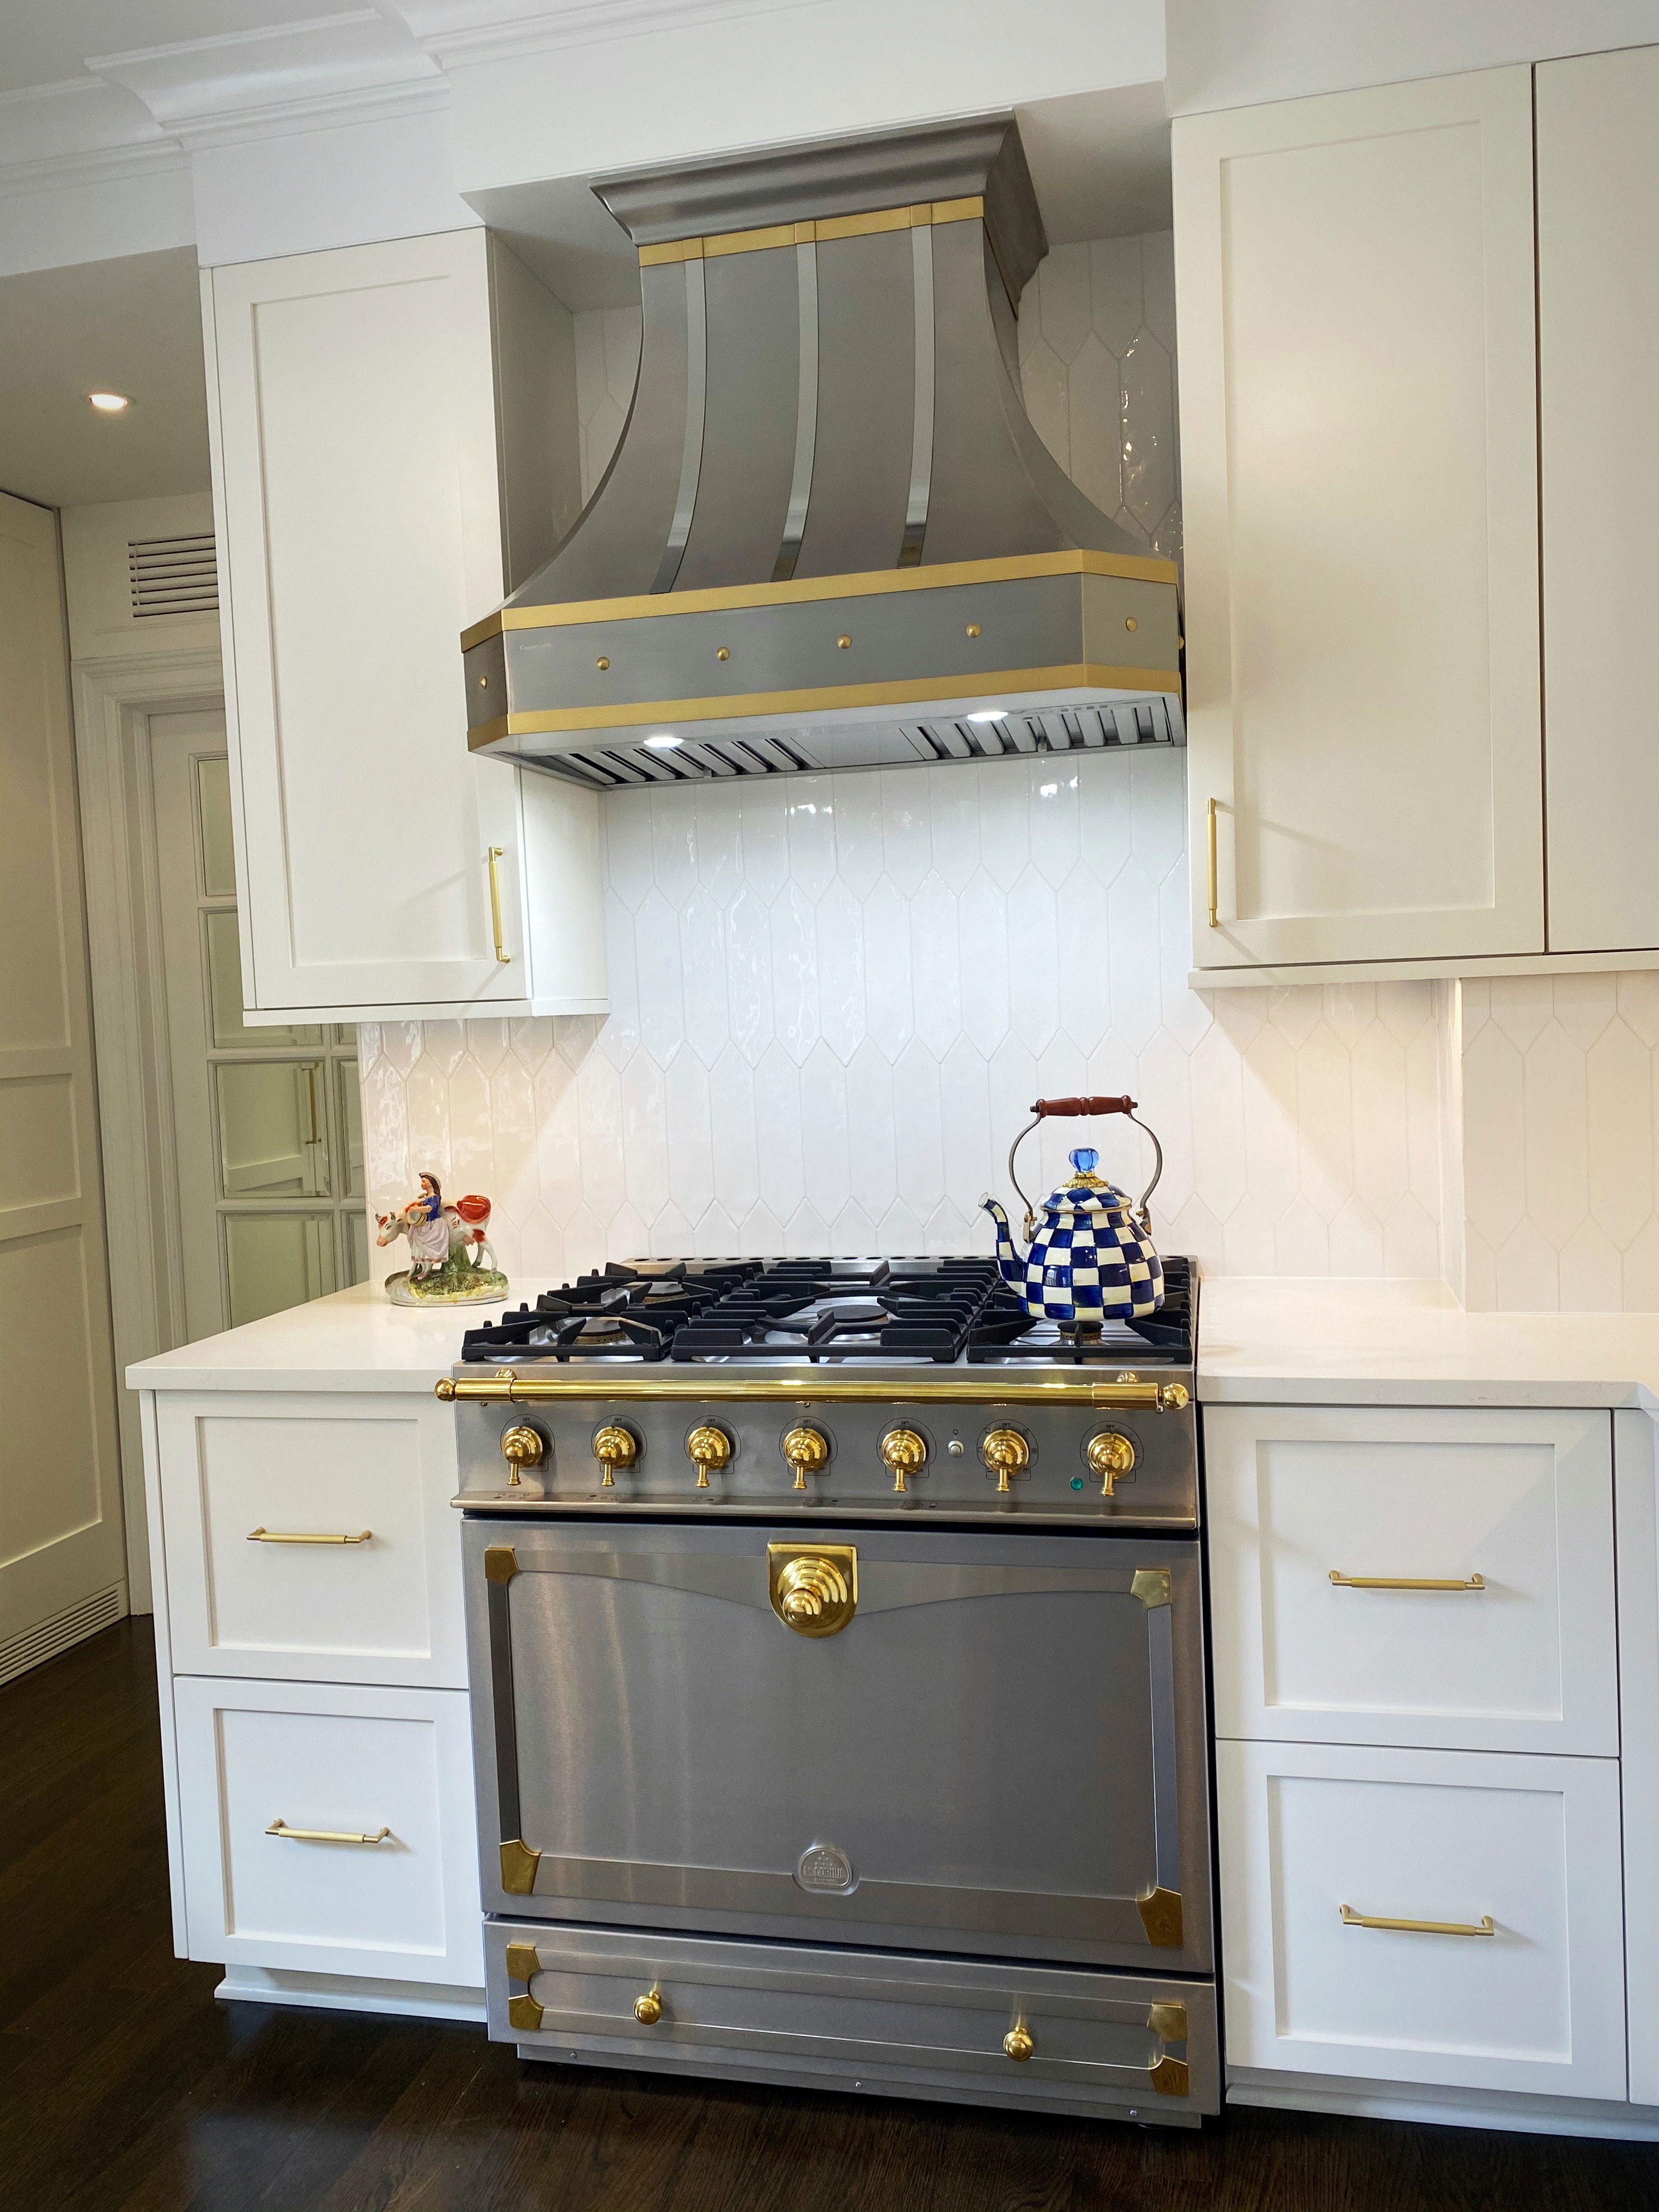 French kitchen design with white cabinets with marble kitchen countertop stylish brick backsplash with range hood